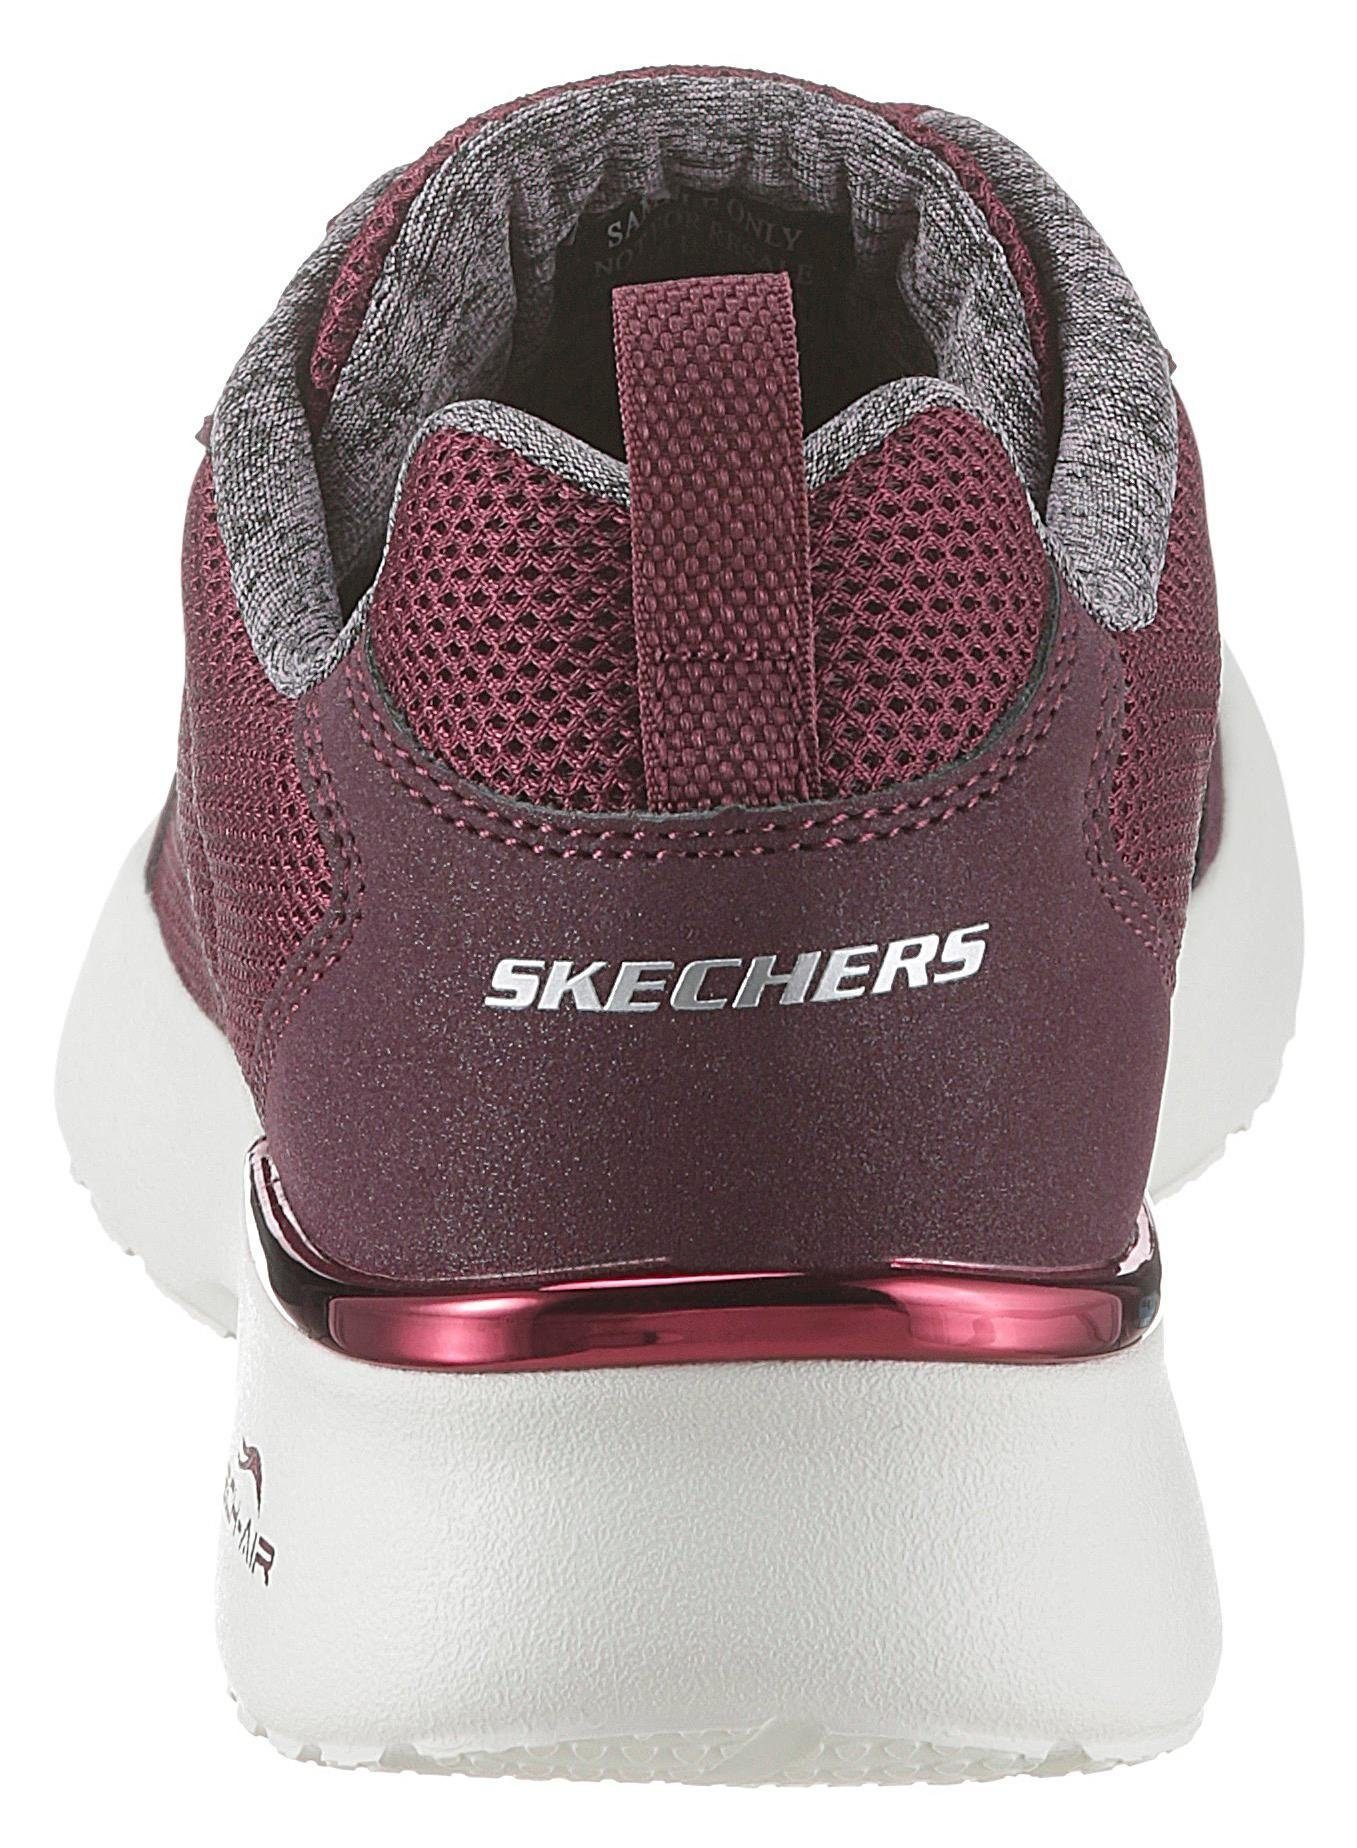 Skech-Air dunkelrot an - mit der Metallic-Element Fast Brake Skechers Sneaker Dynamight Ferse